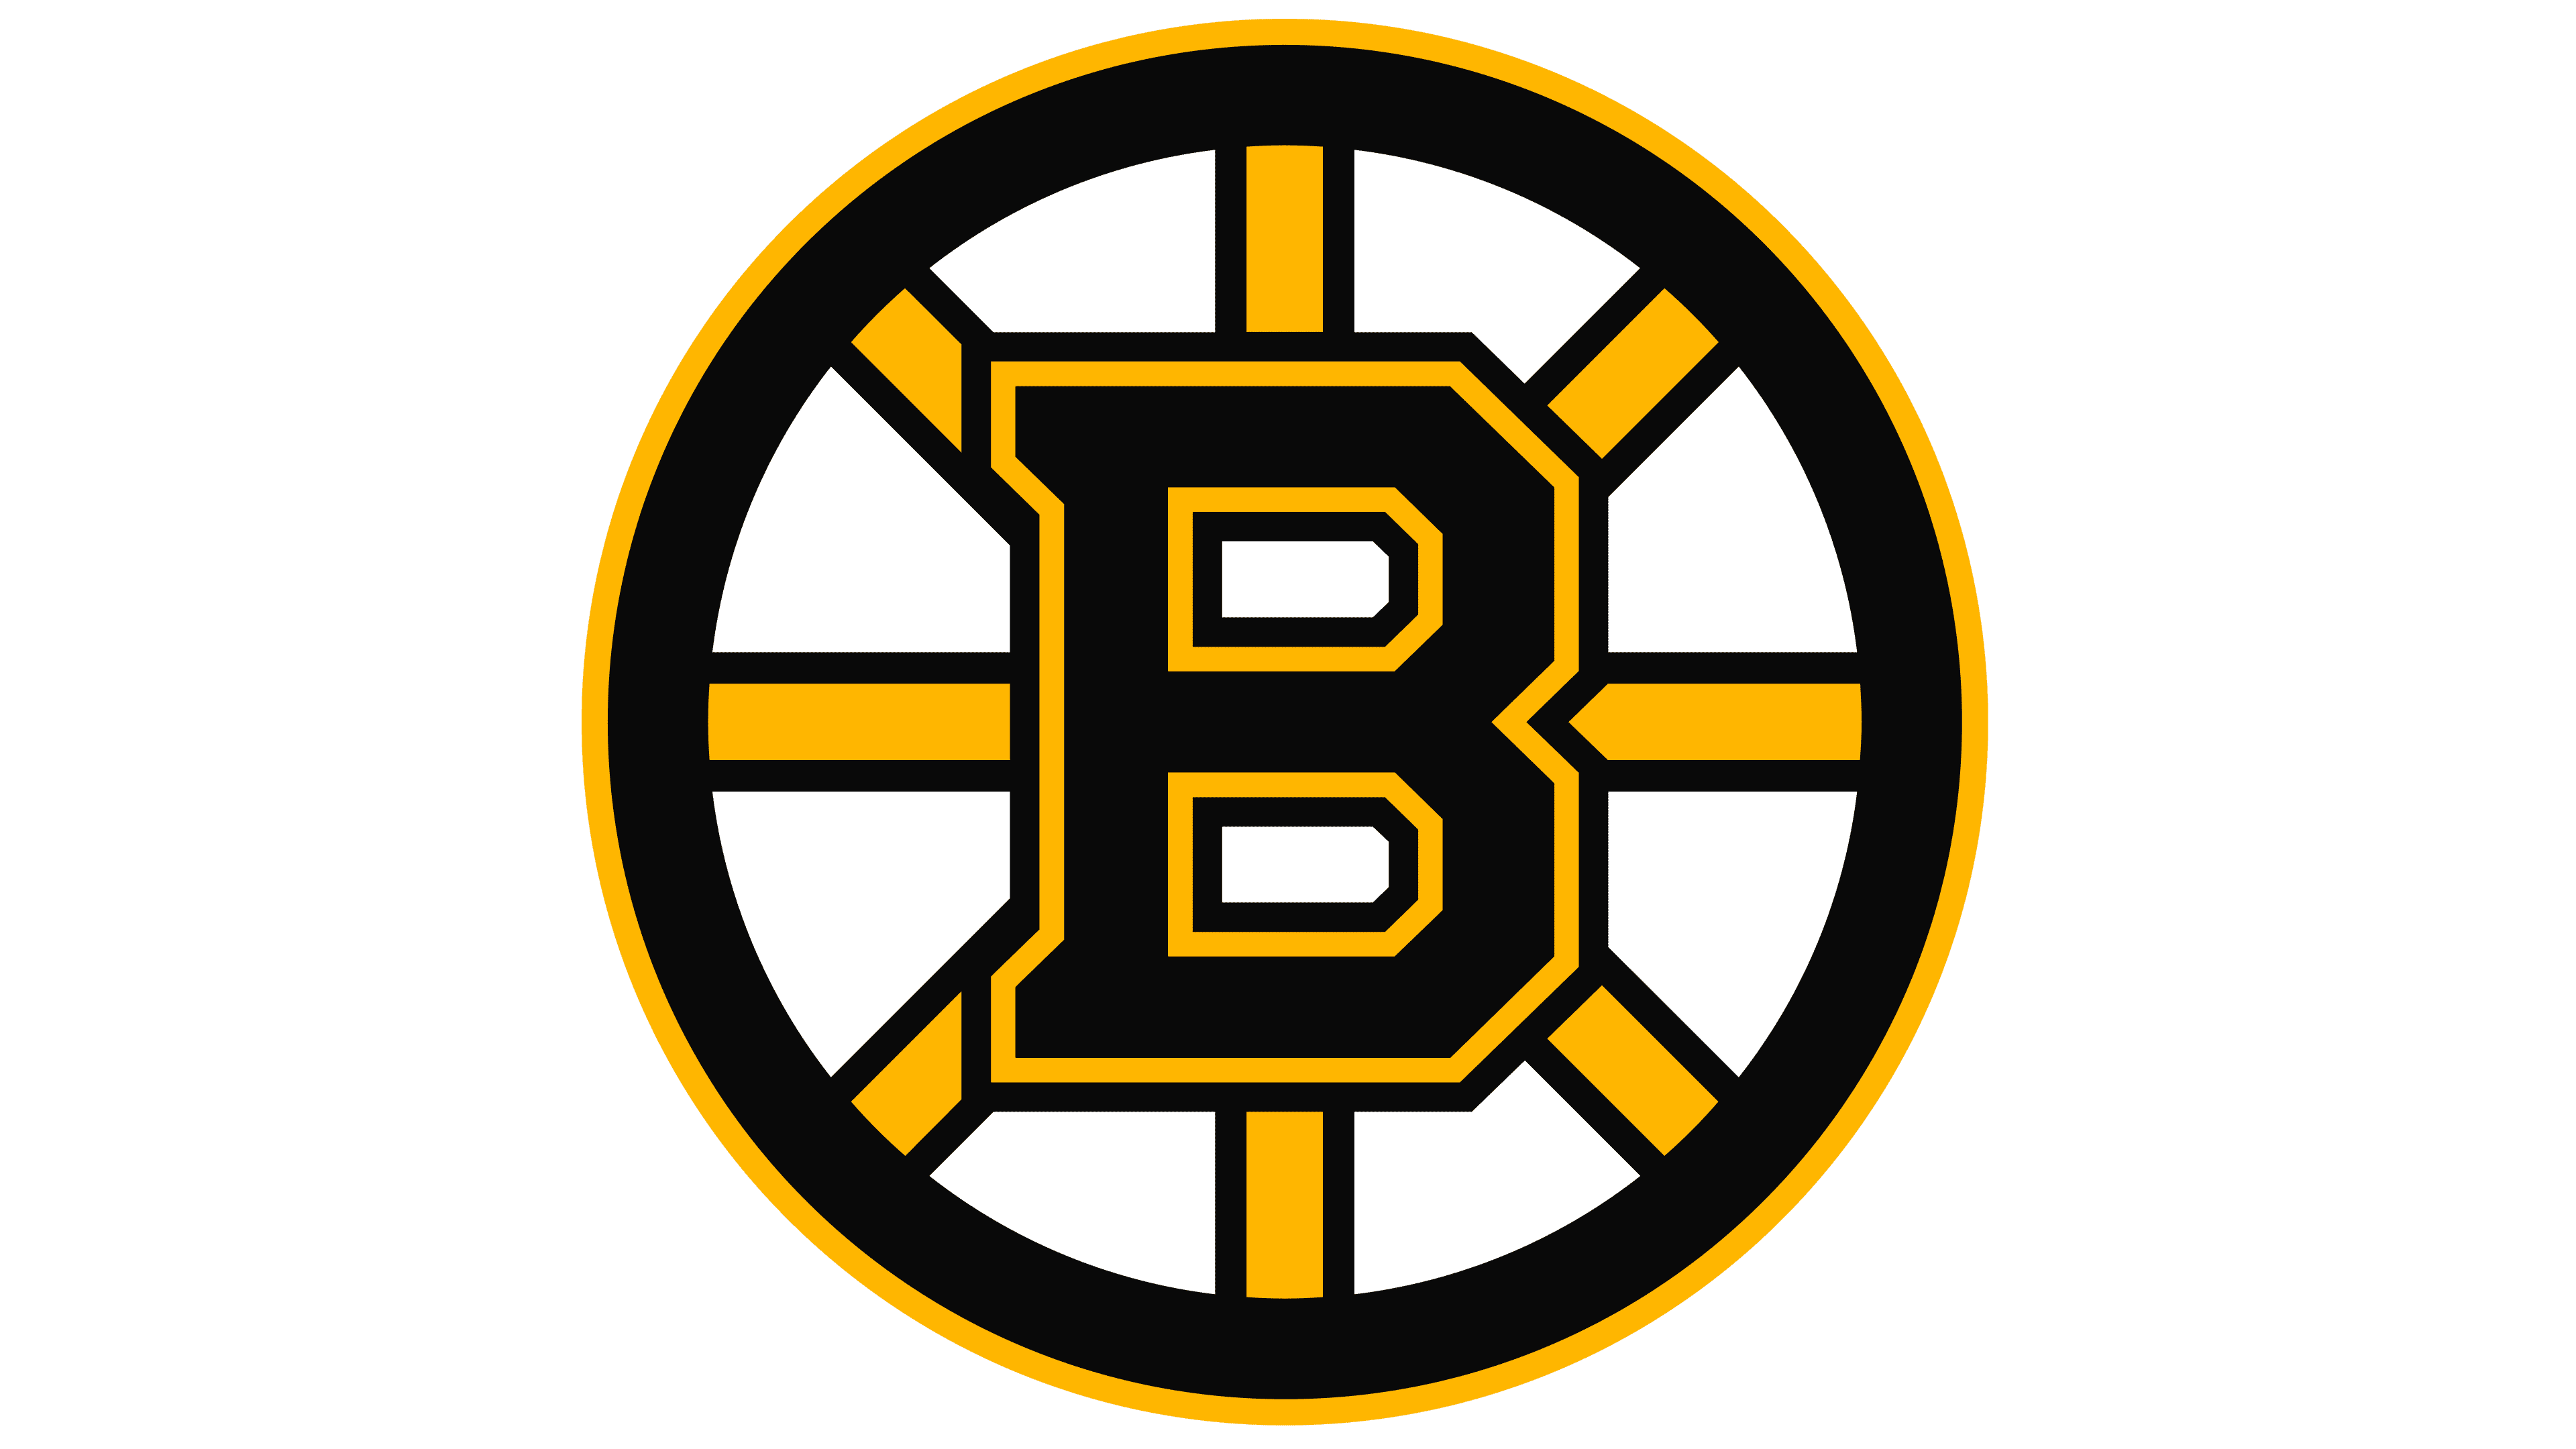 Boston Bruins vs. New Jersey Devils, TD Garden, Boston, January 15